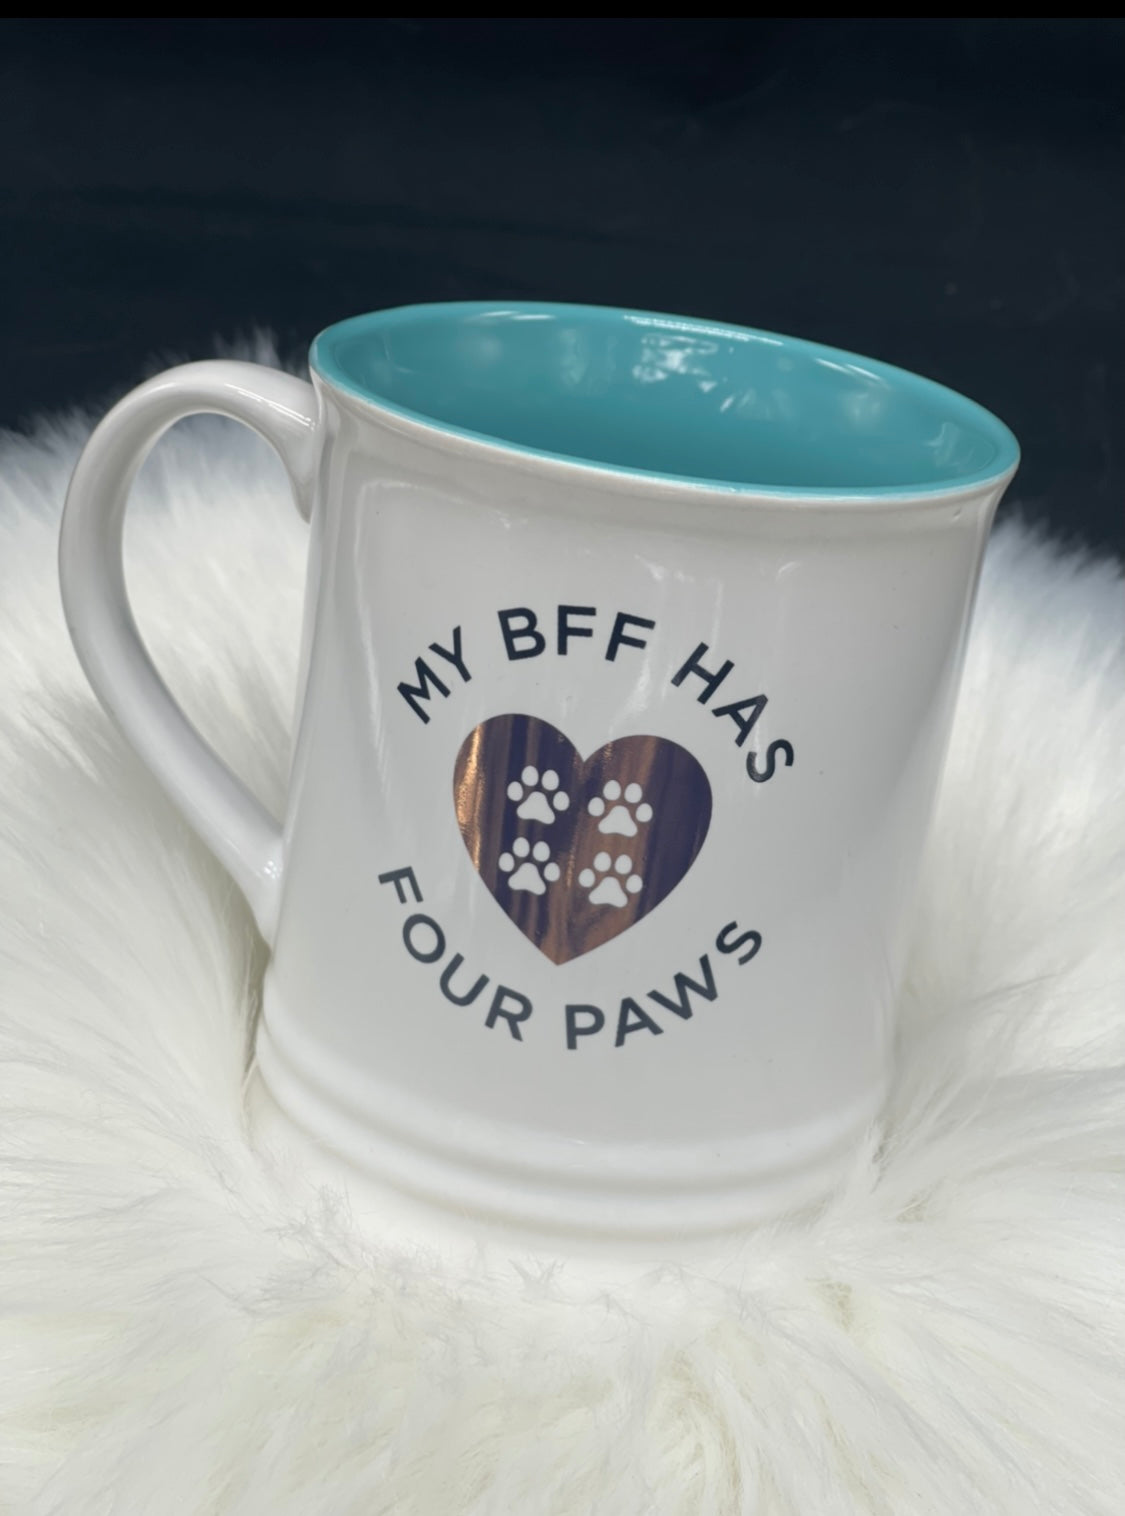 My BFF Has Four Paws Mug Blu Spot Inc.